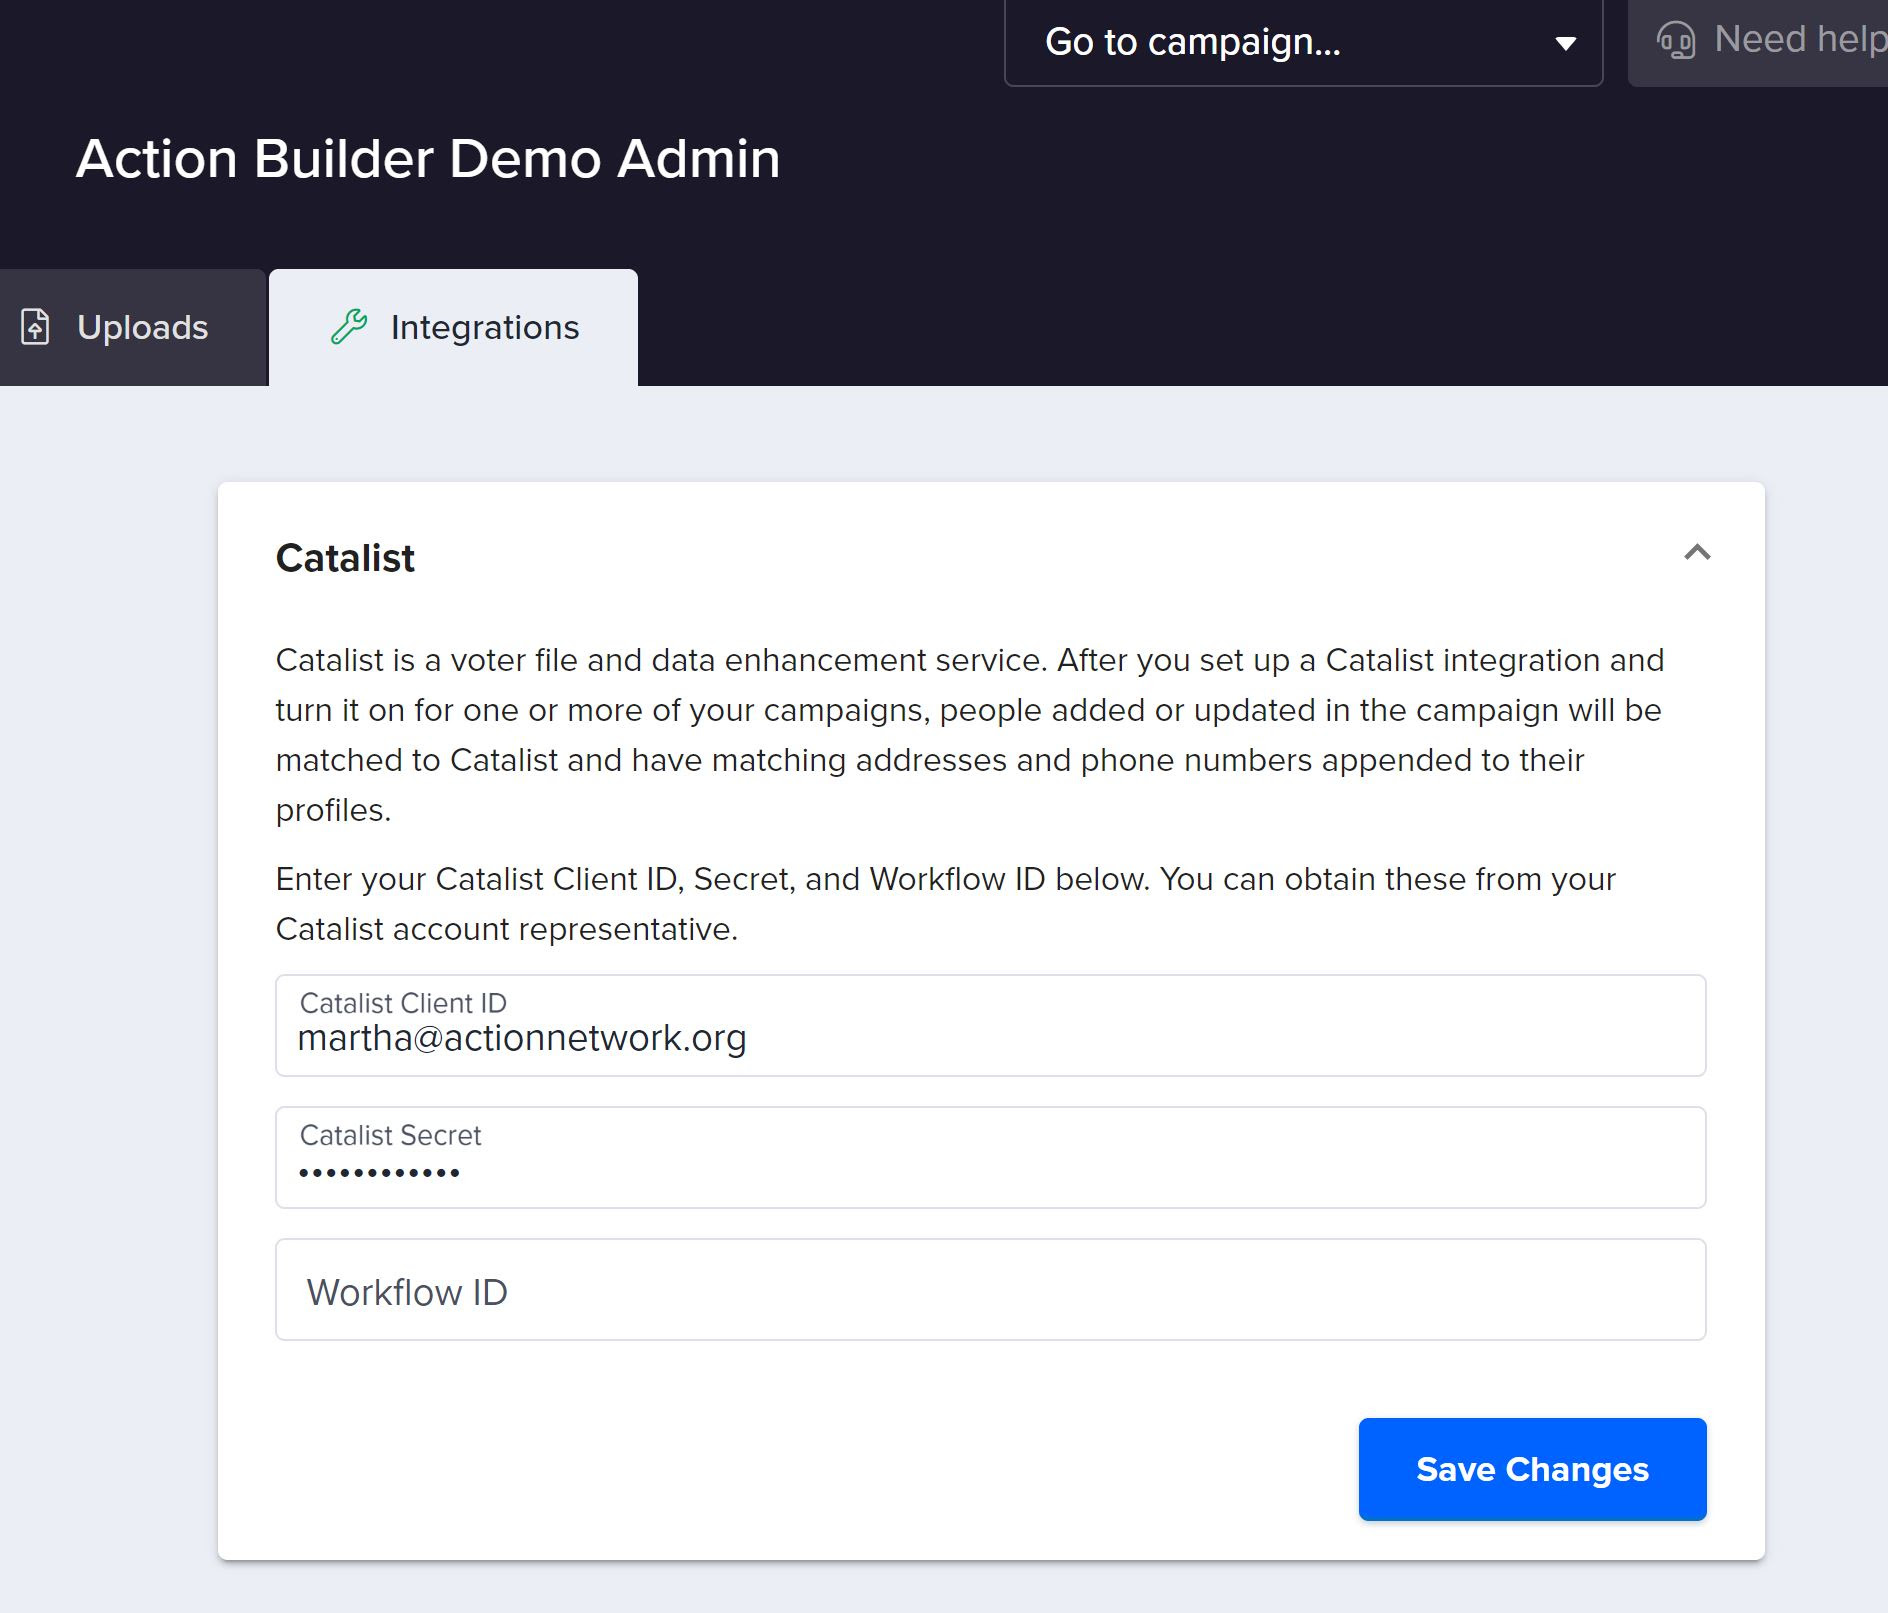 Screenshot of Catalist integration screen in Action Builder.